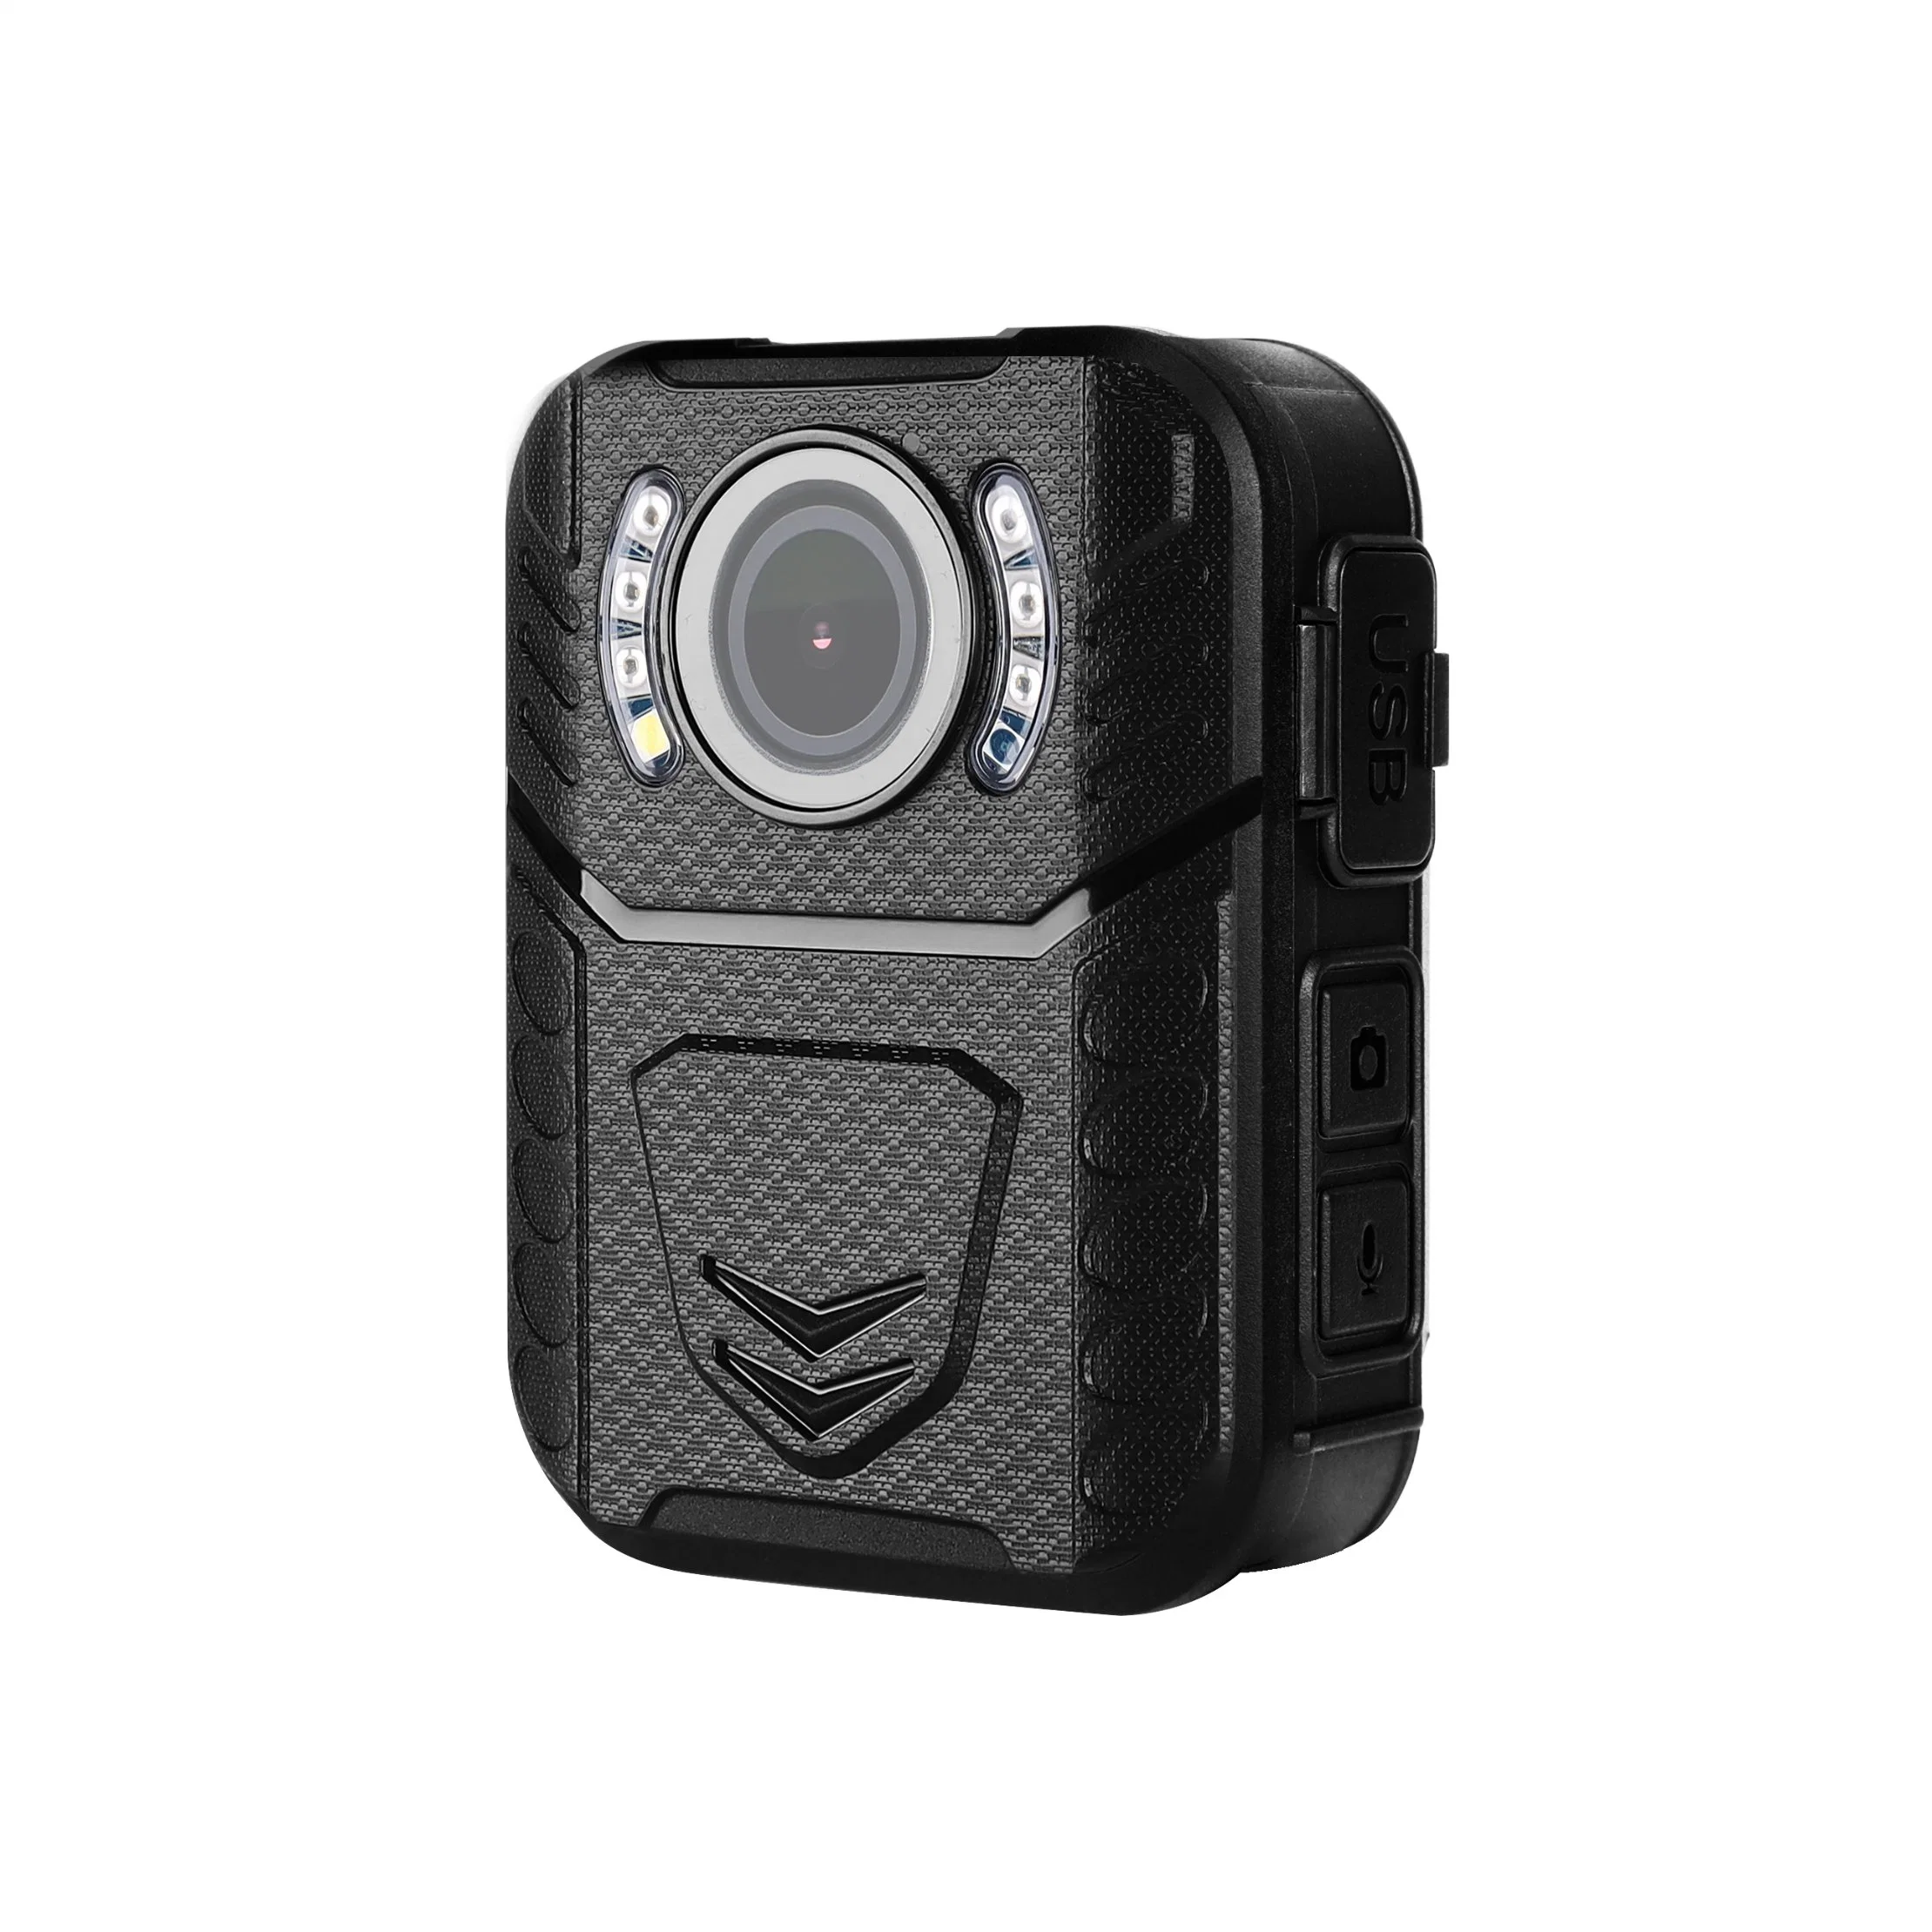 Eeyelog IR Night Vision Body Camera X4K1 HD 1512p Motion Detection and Waterproof IP66-IP68